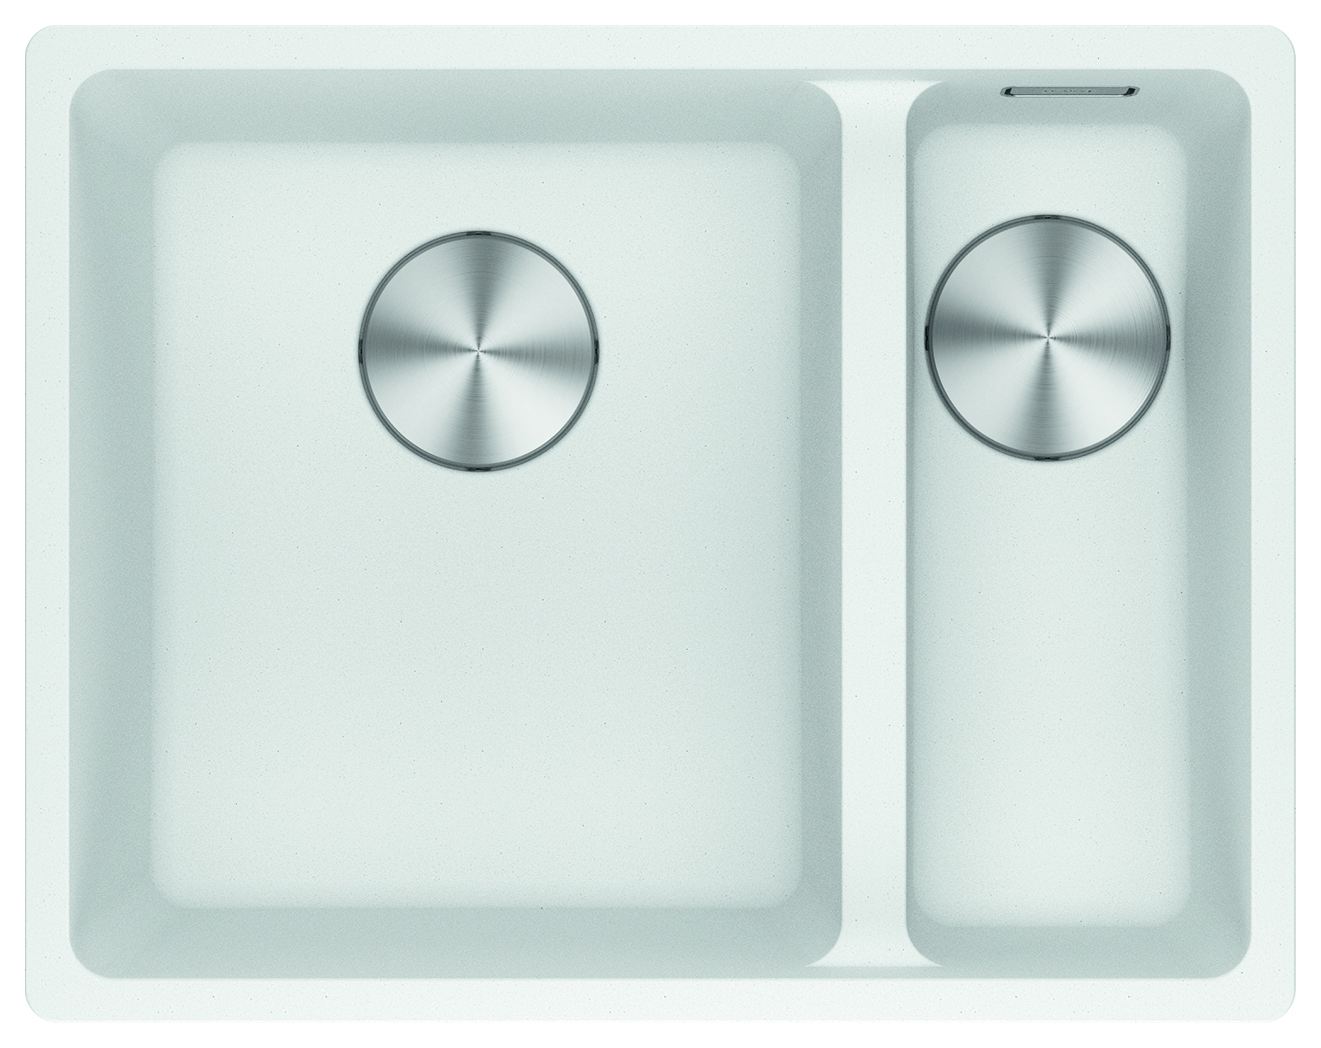 Image of Franke Maris Granite 1.5 Bowl Undermount Kitchen Sink RH - White